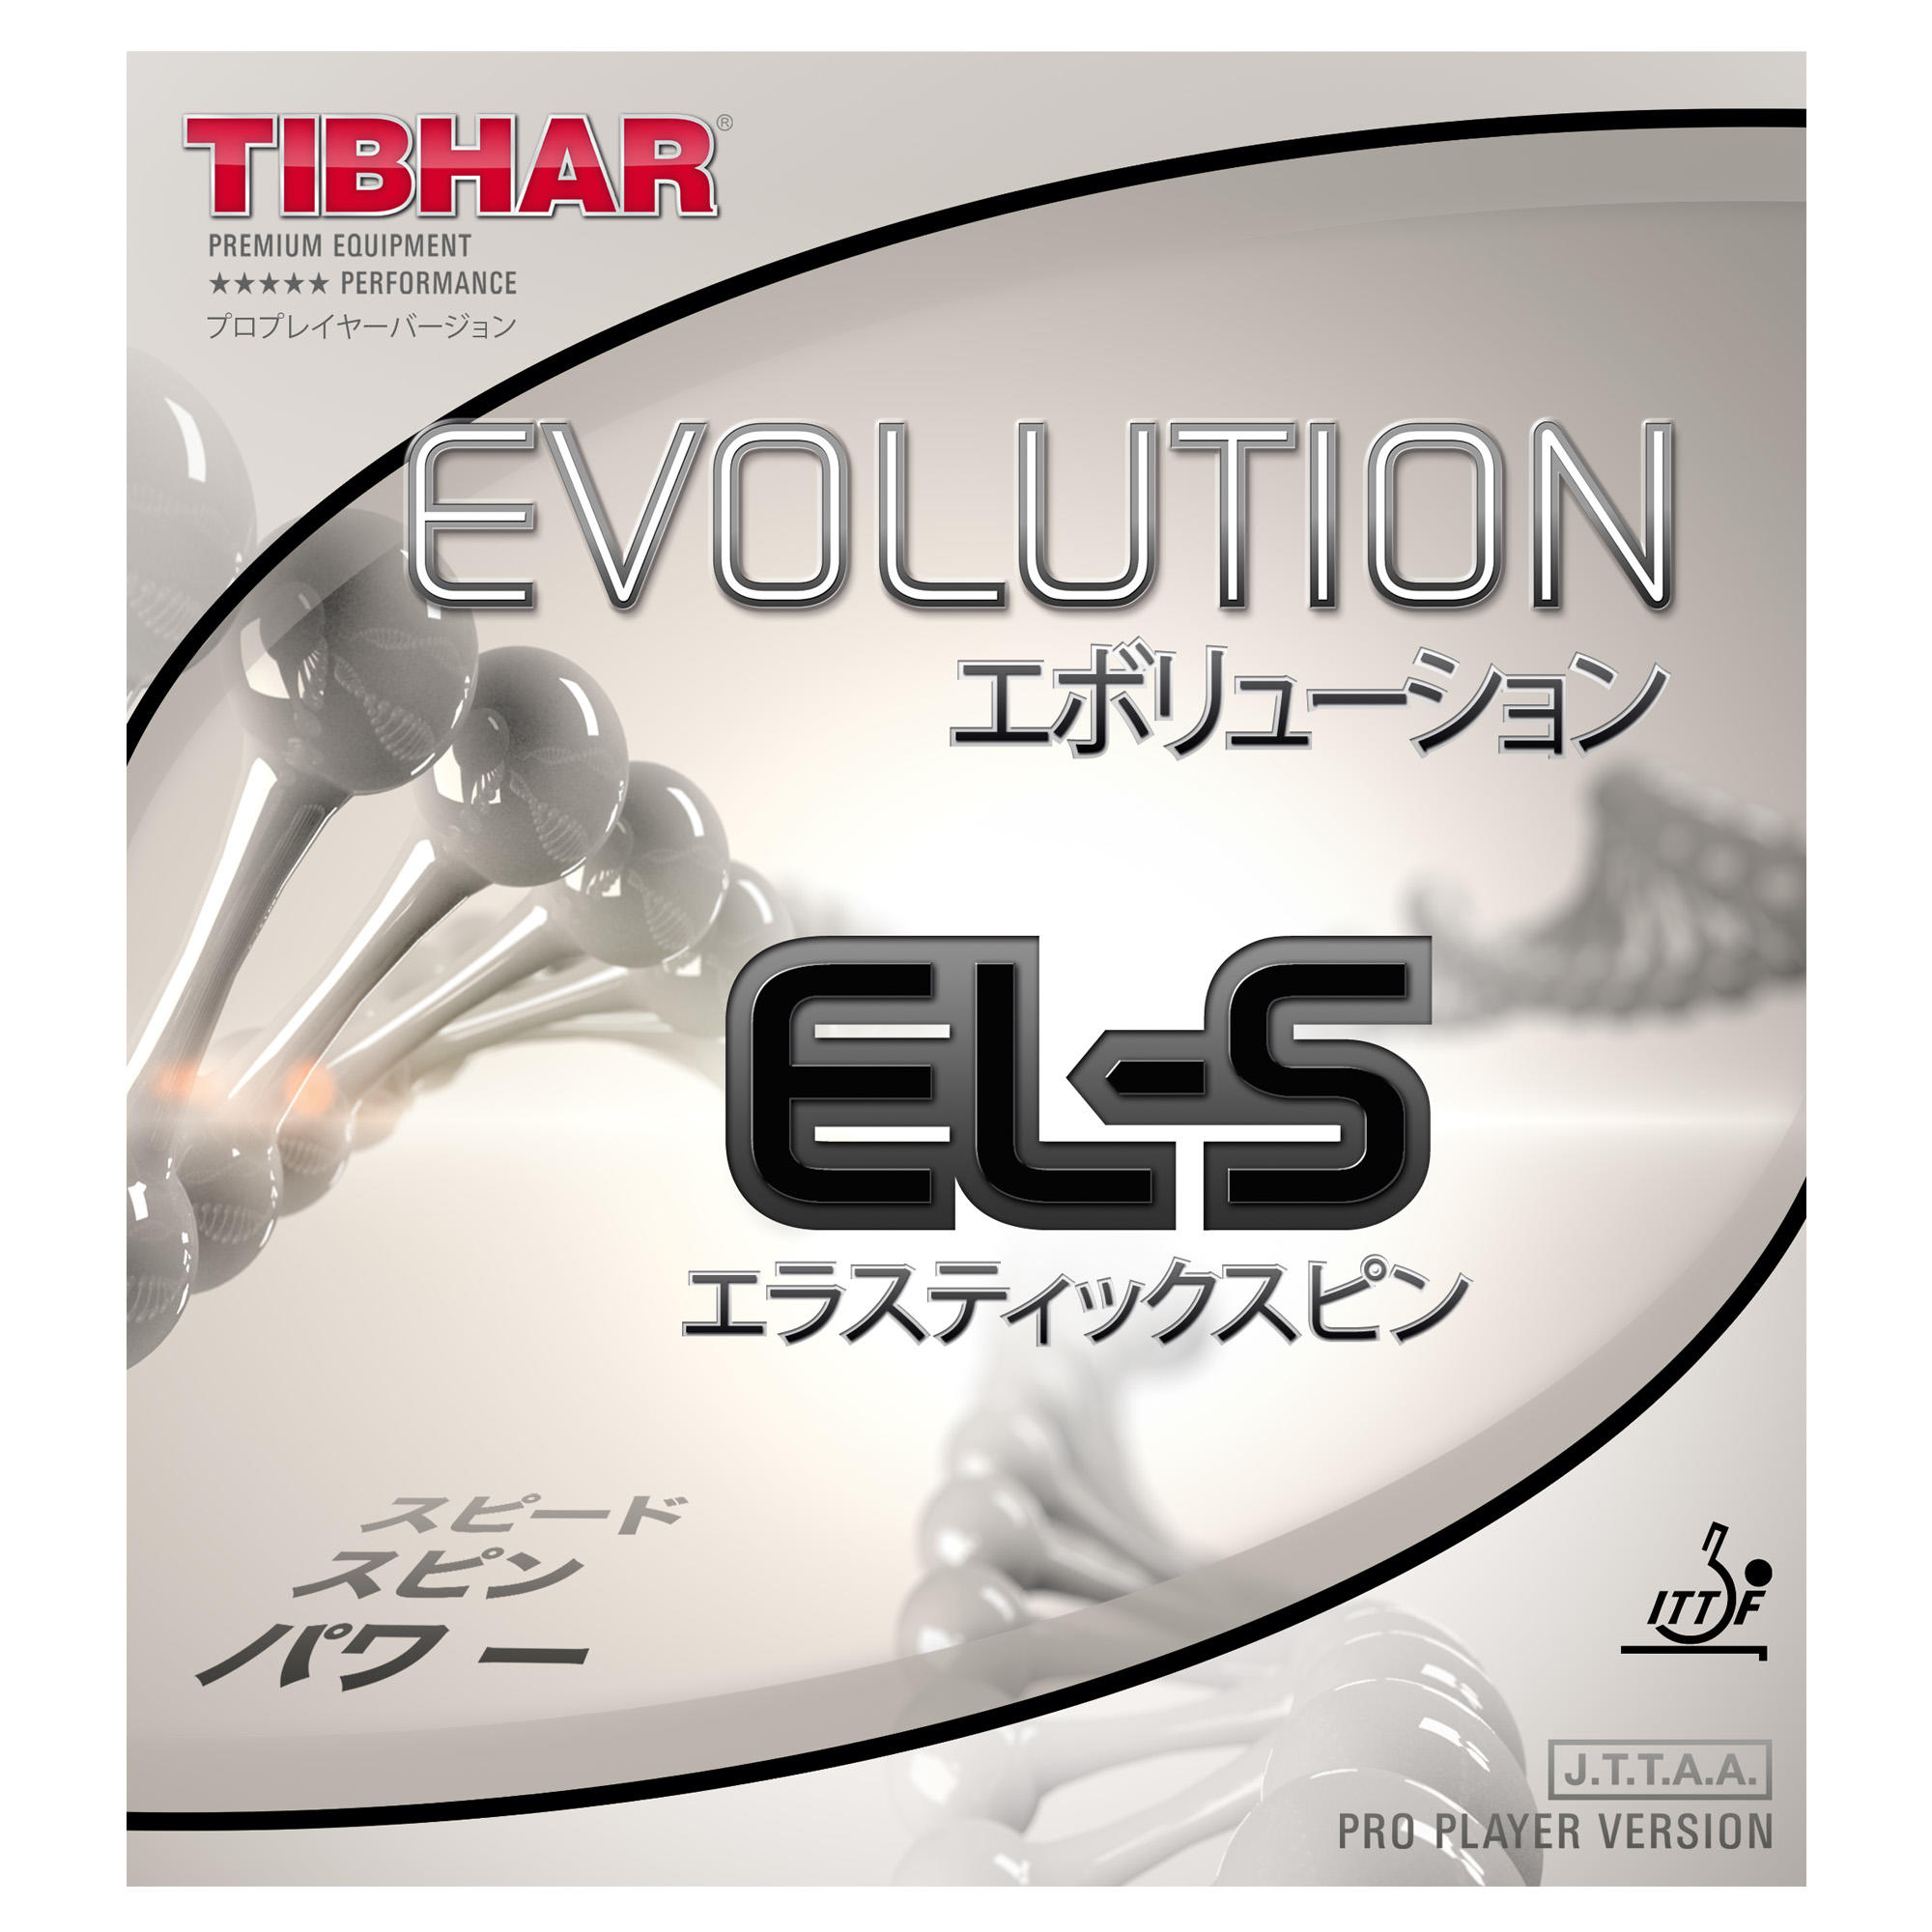 Față Paletă Tenis Evolution EL-S La Oferta Online decathlon imagine La Oferta Online